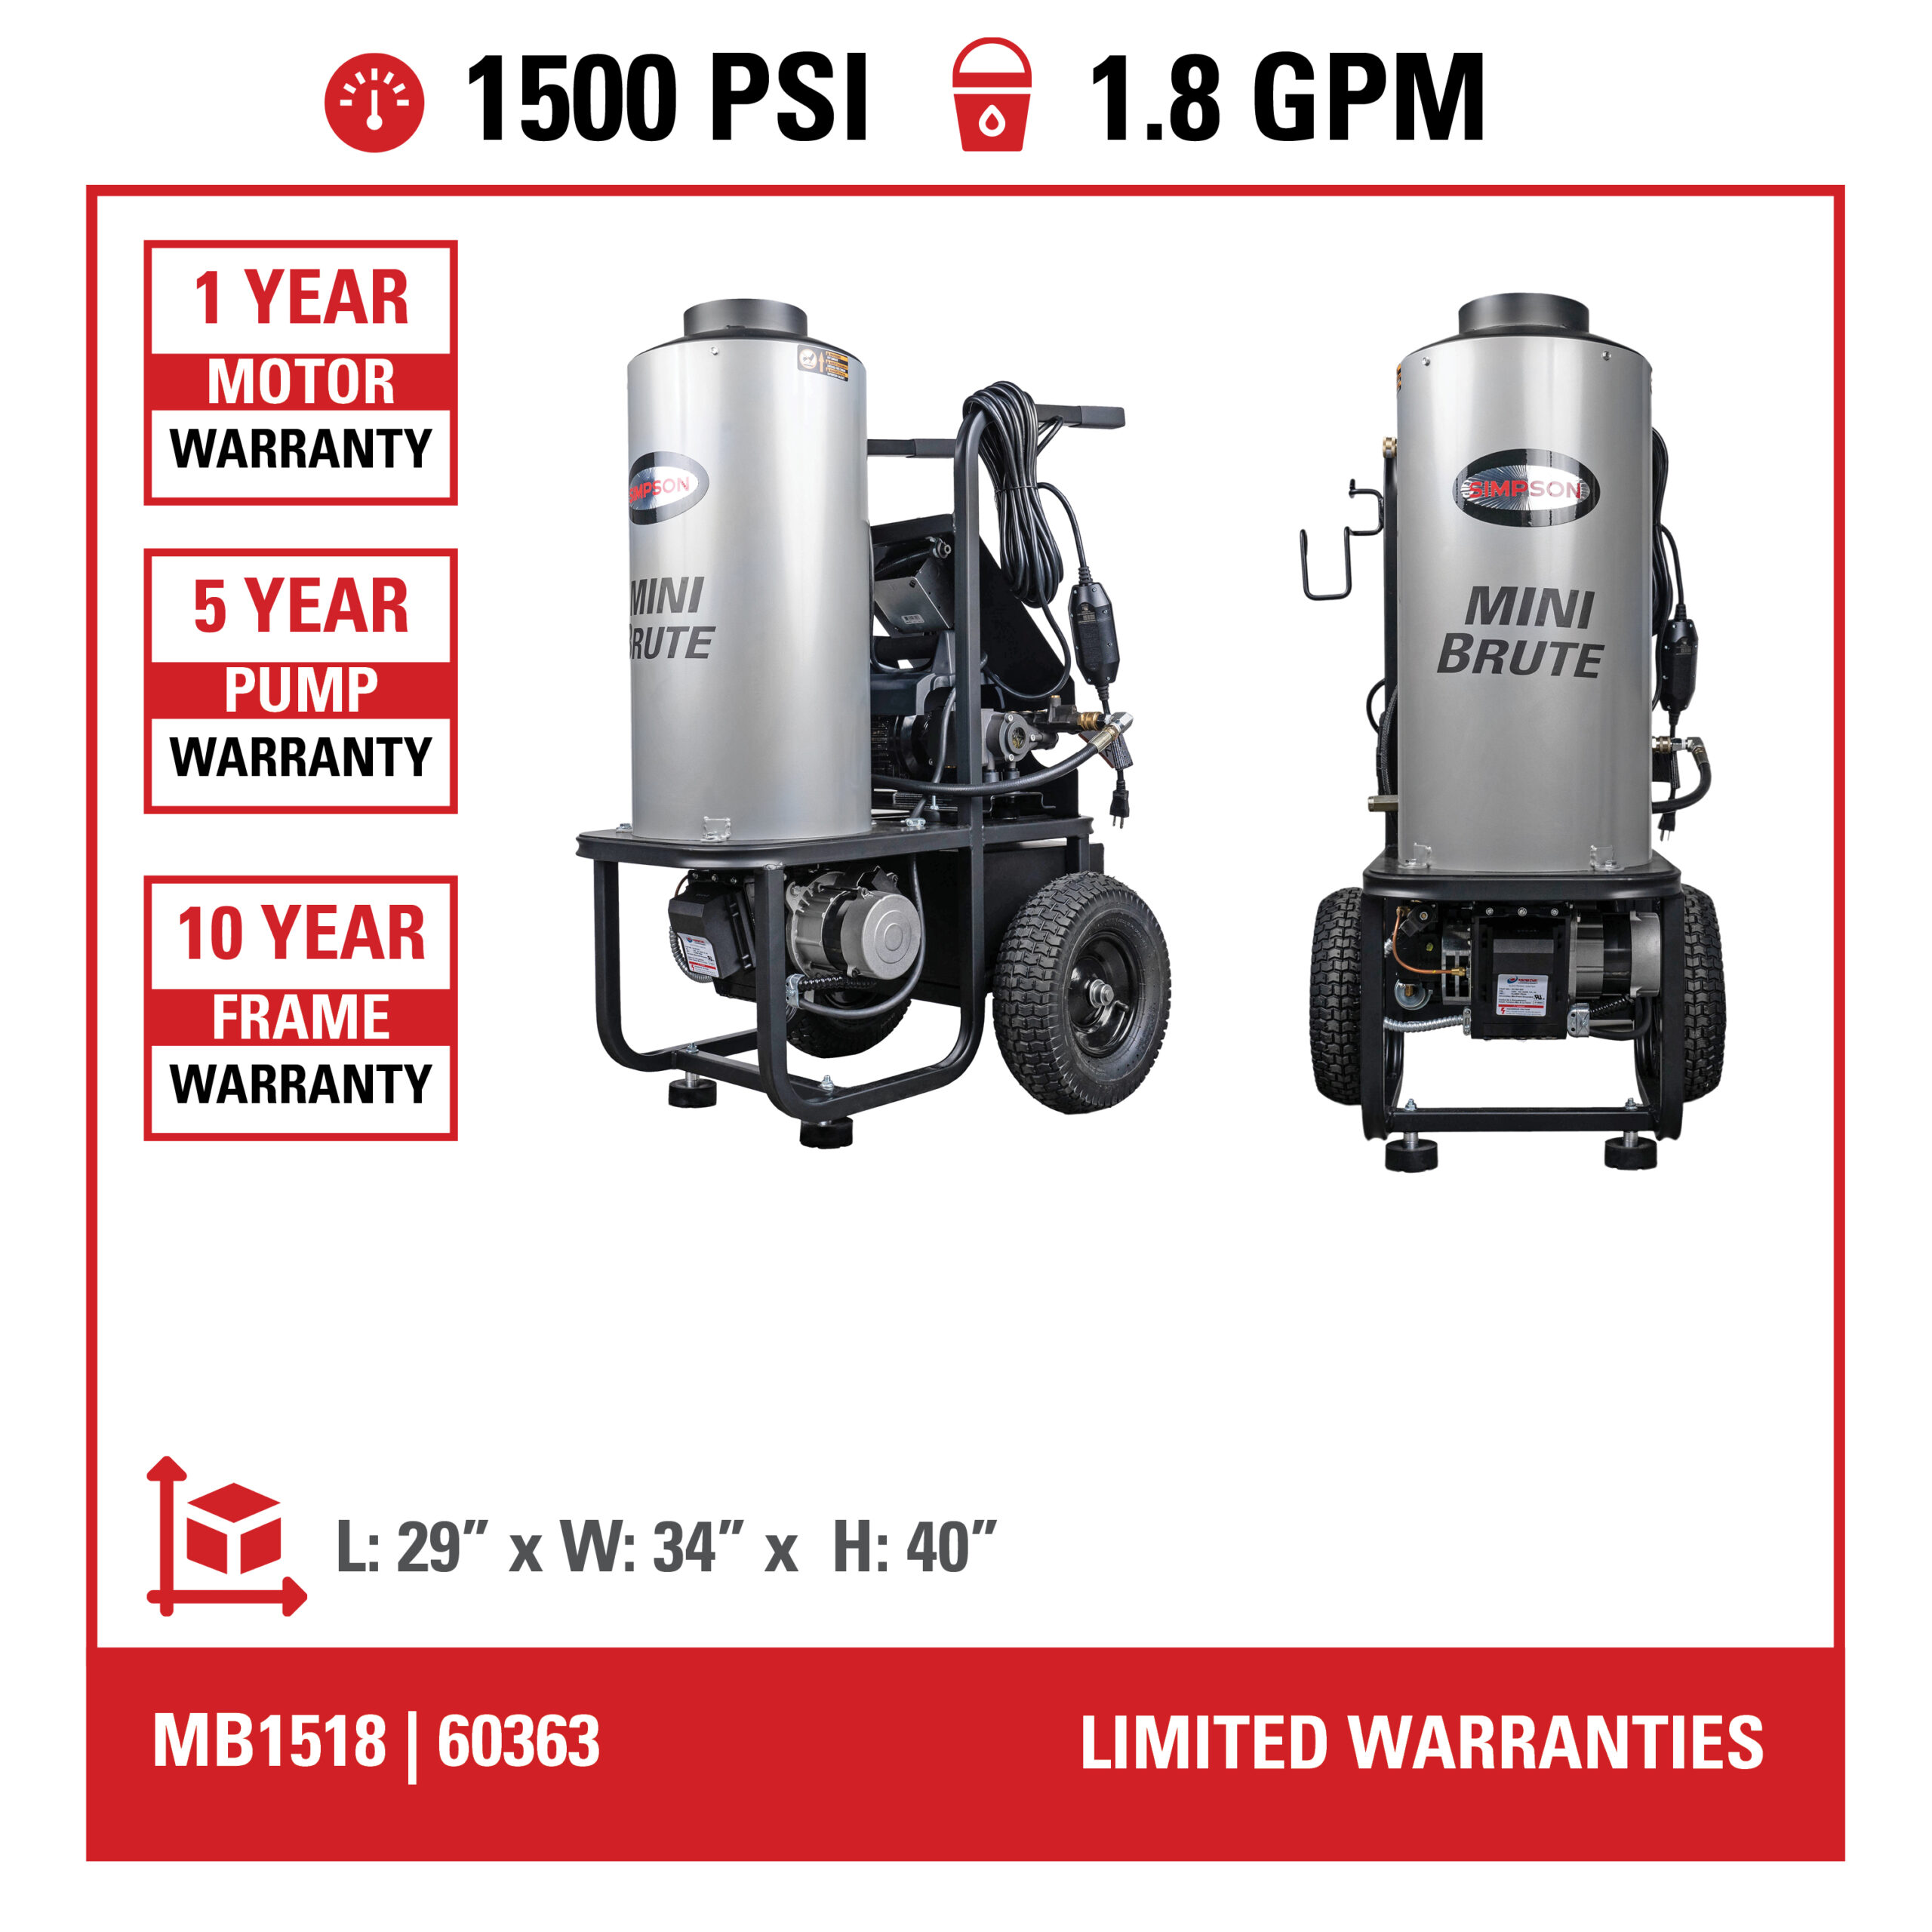 1500 PSI @ 1.8 GPM Direct Drive Electric Pressure Washer w/ AAA Pump (Mini Brute)